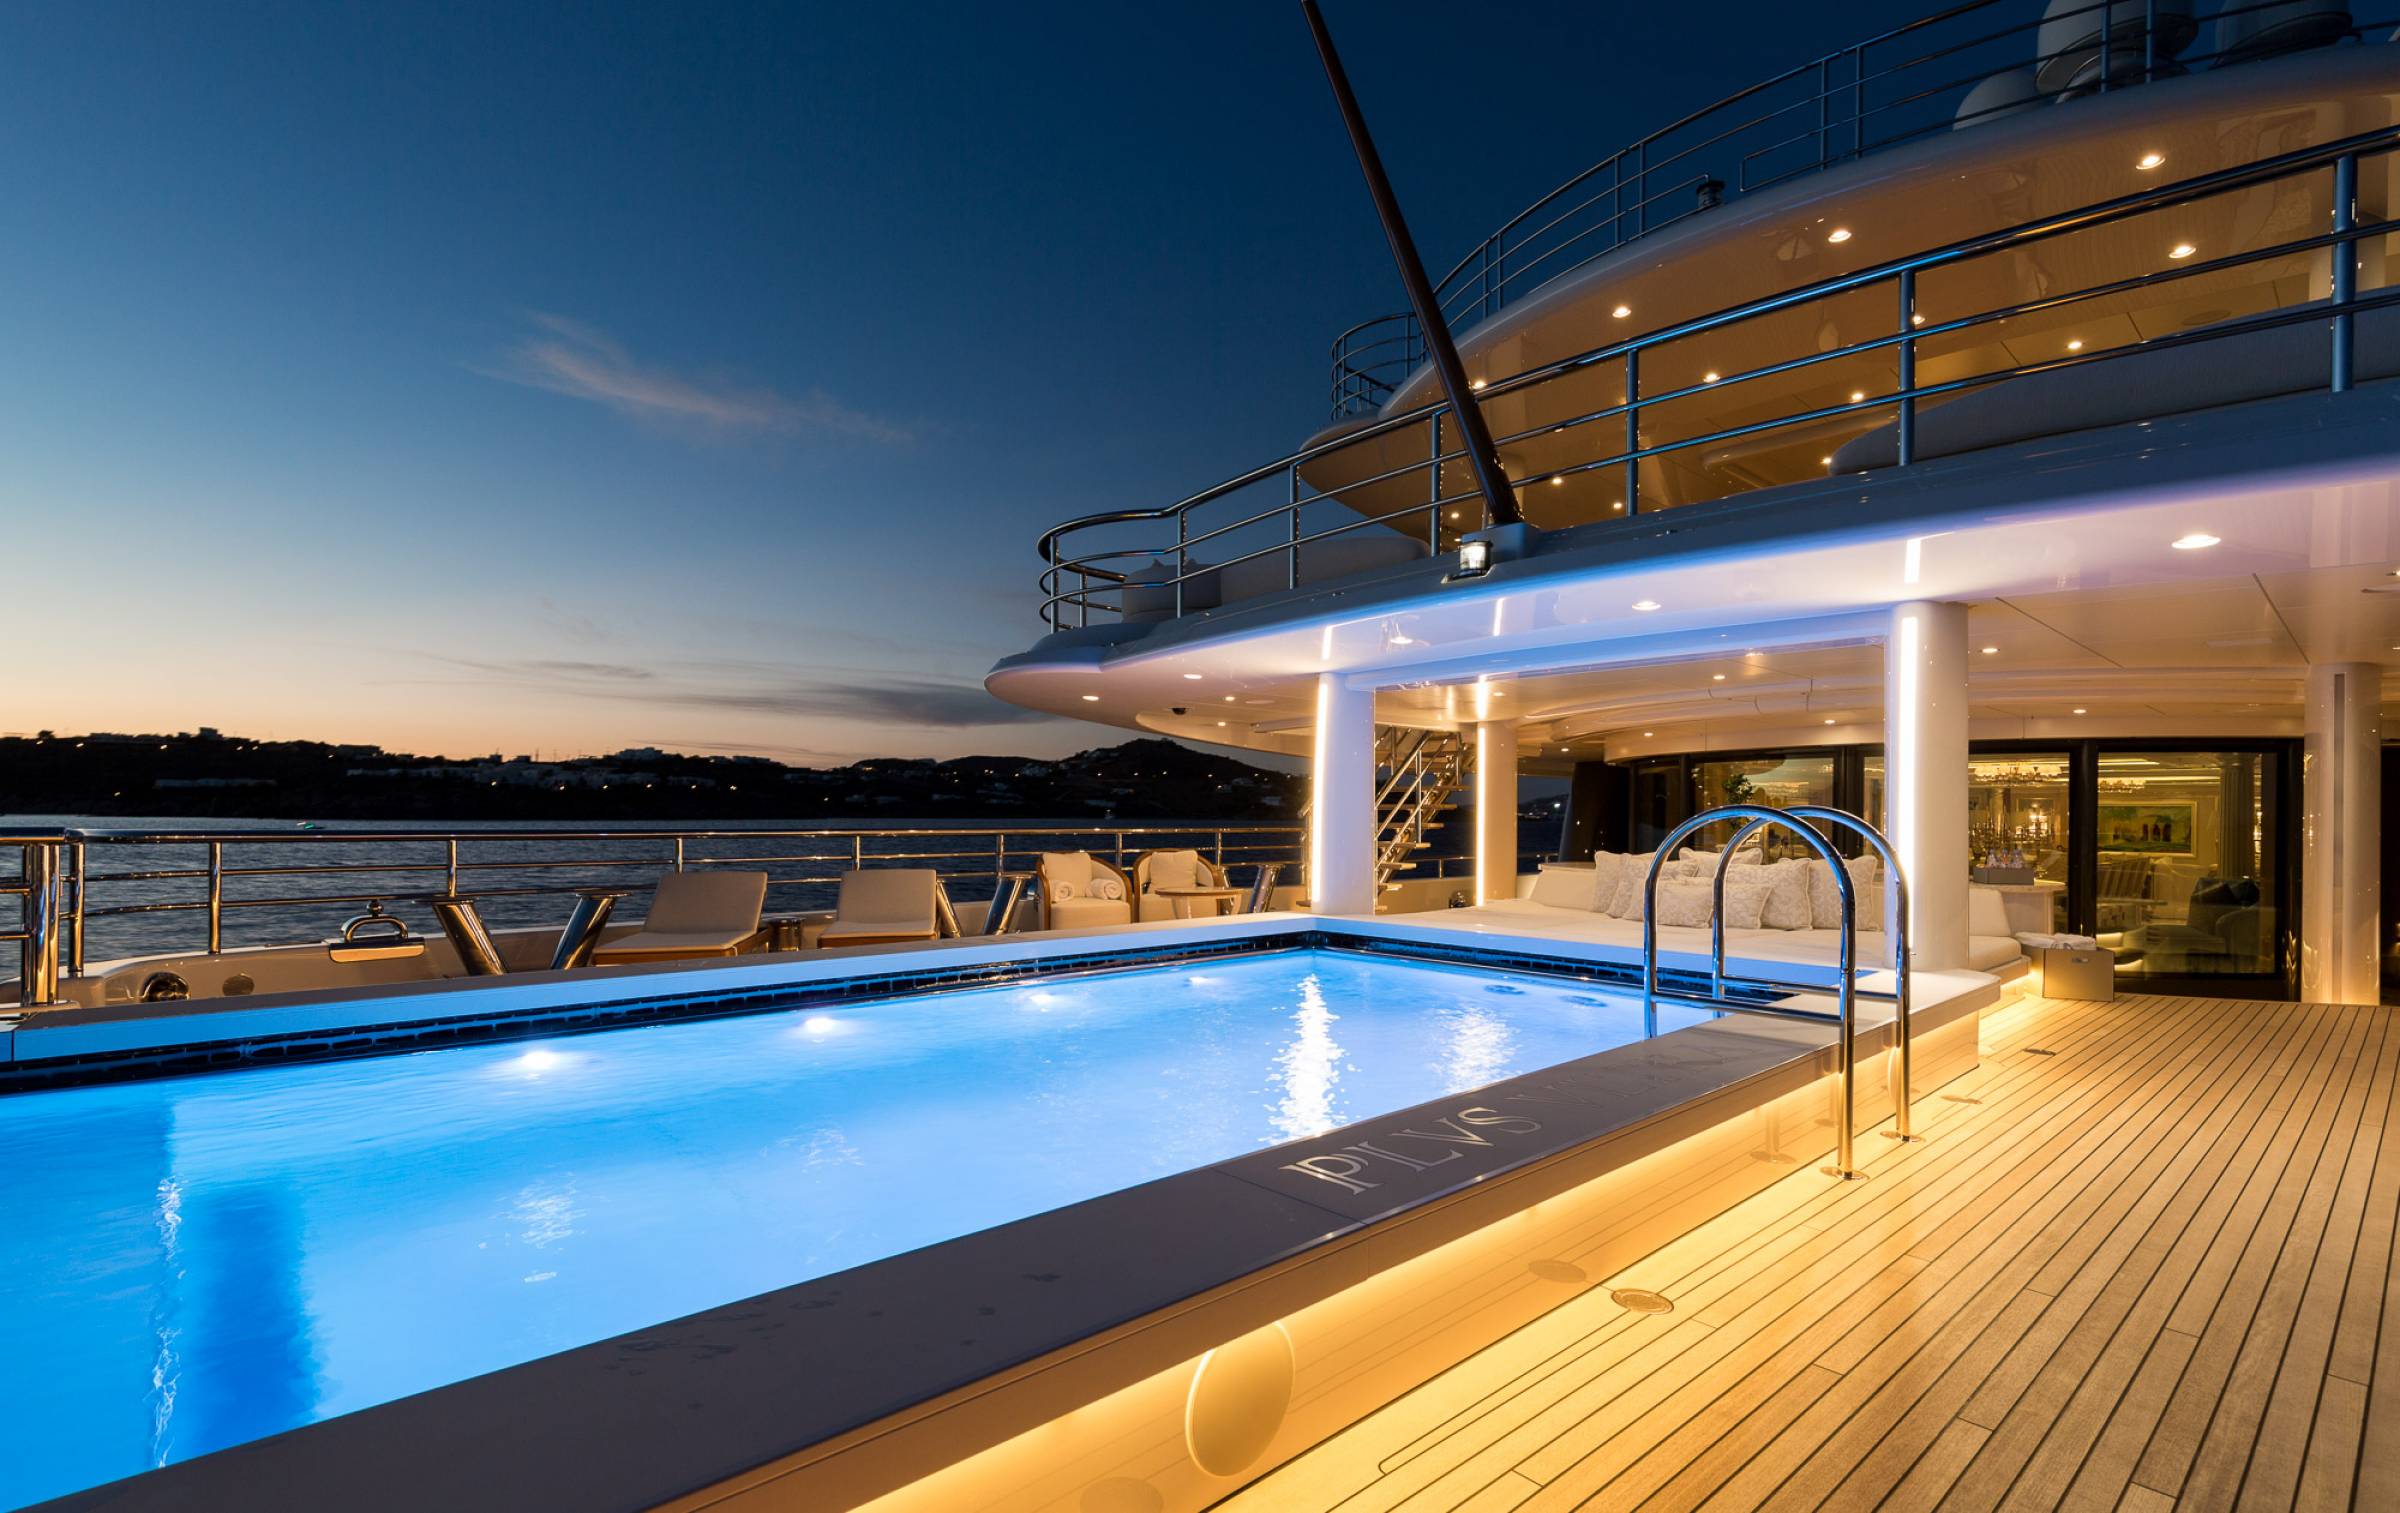 pool on yacht